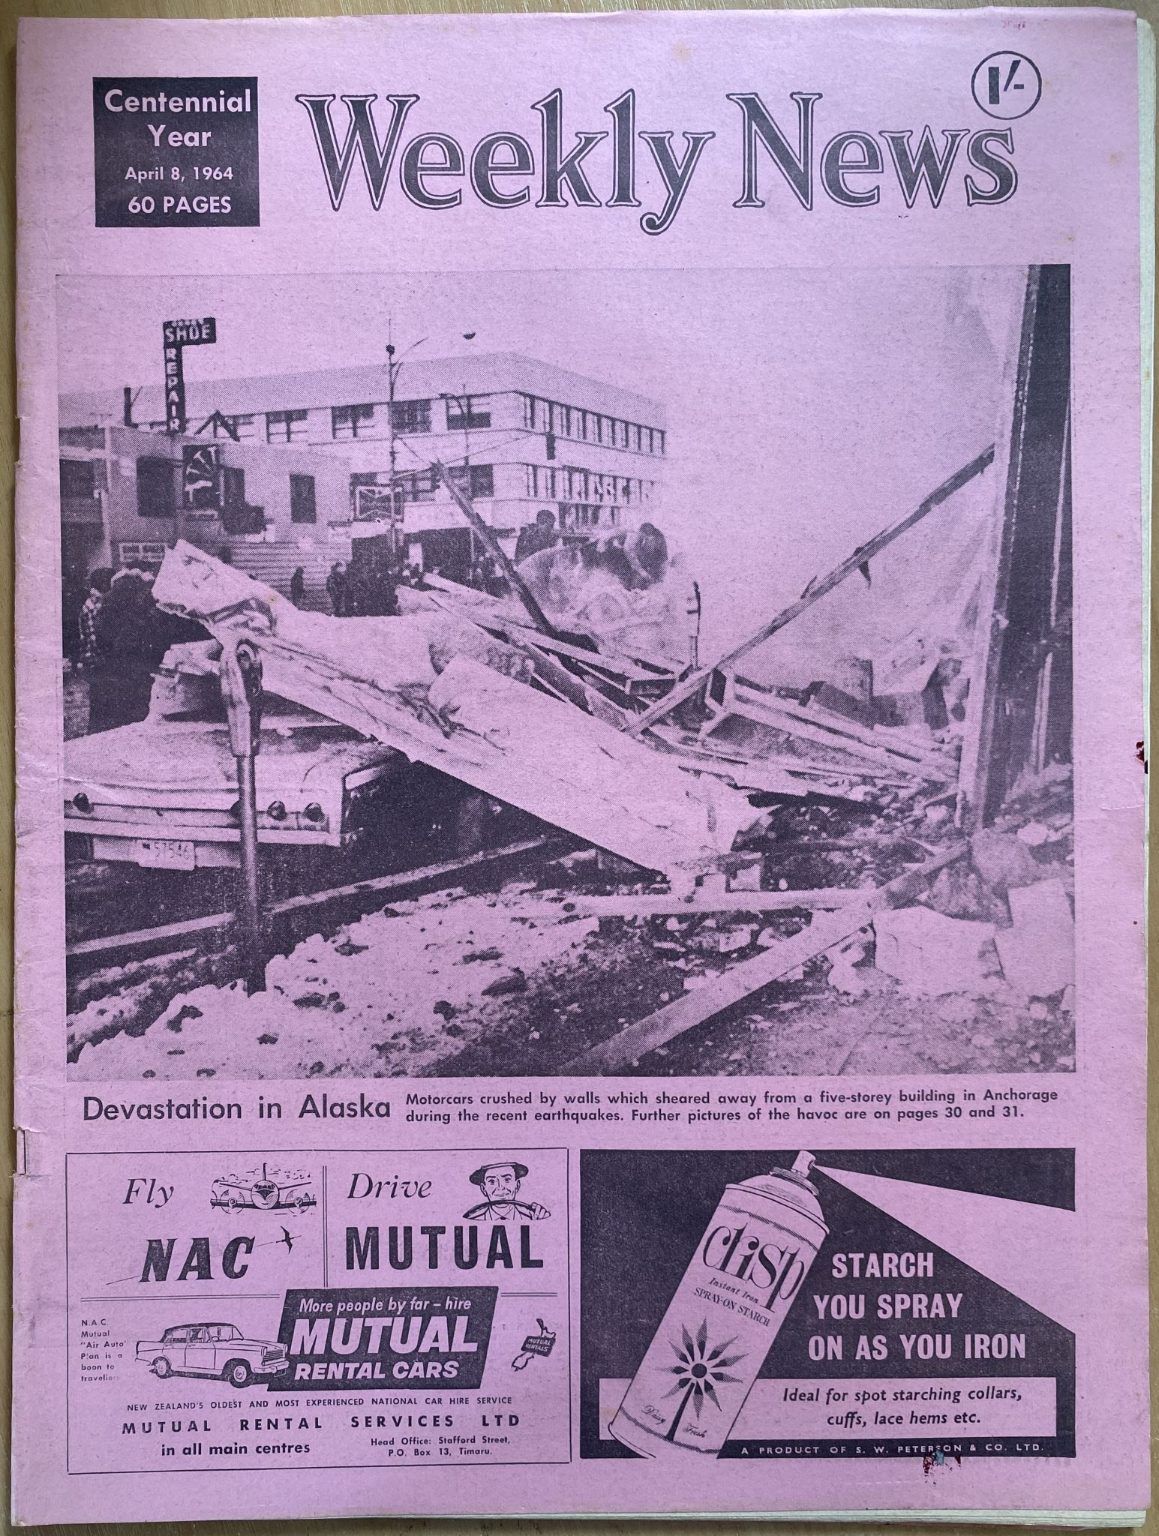 OLD NEWSPAPER: Weekly News, No. 5237, 8 April 1964